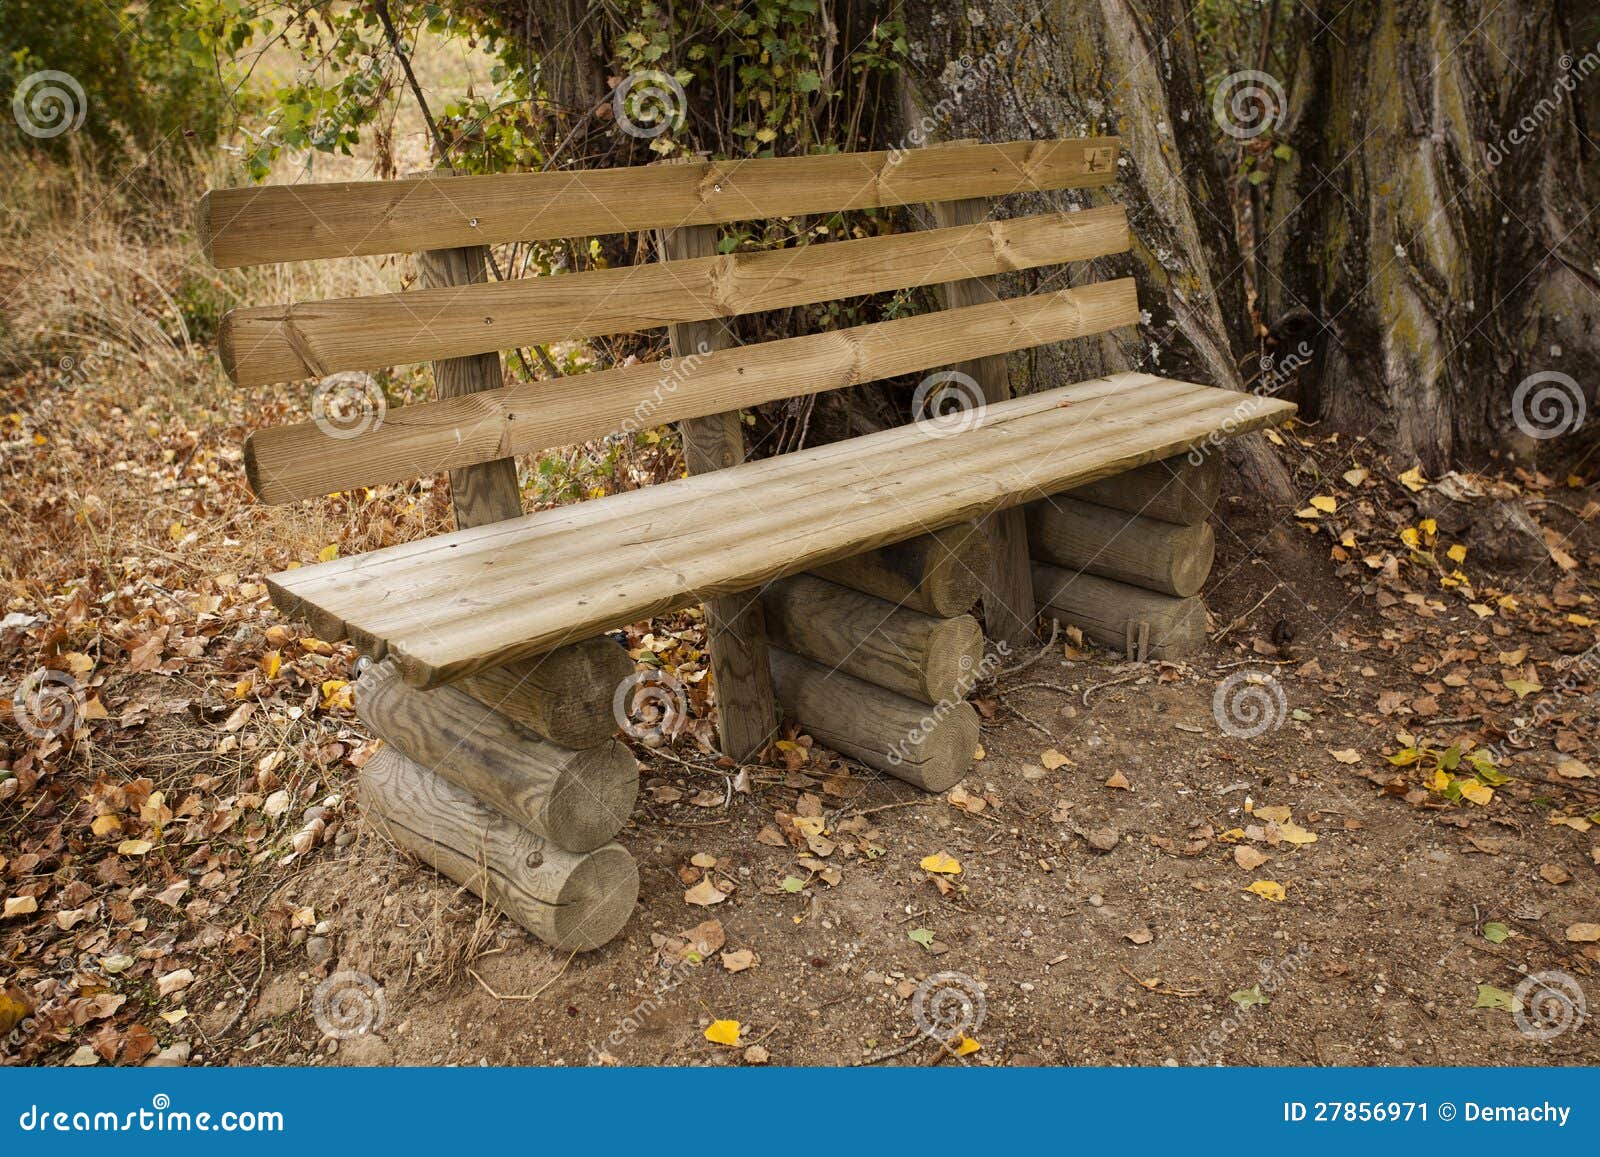 Rustic Park Bench